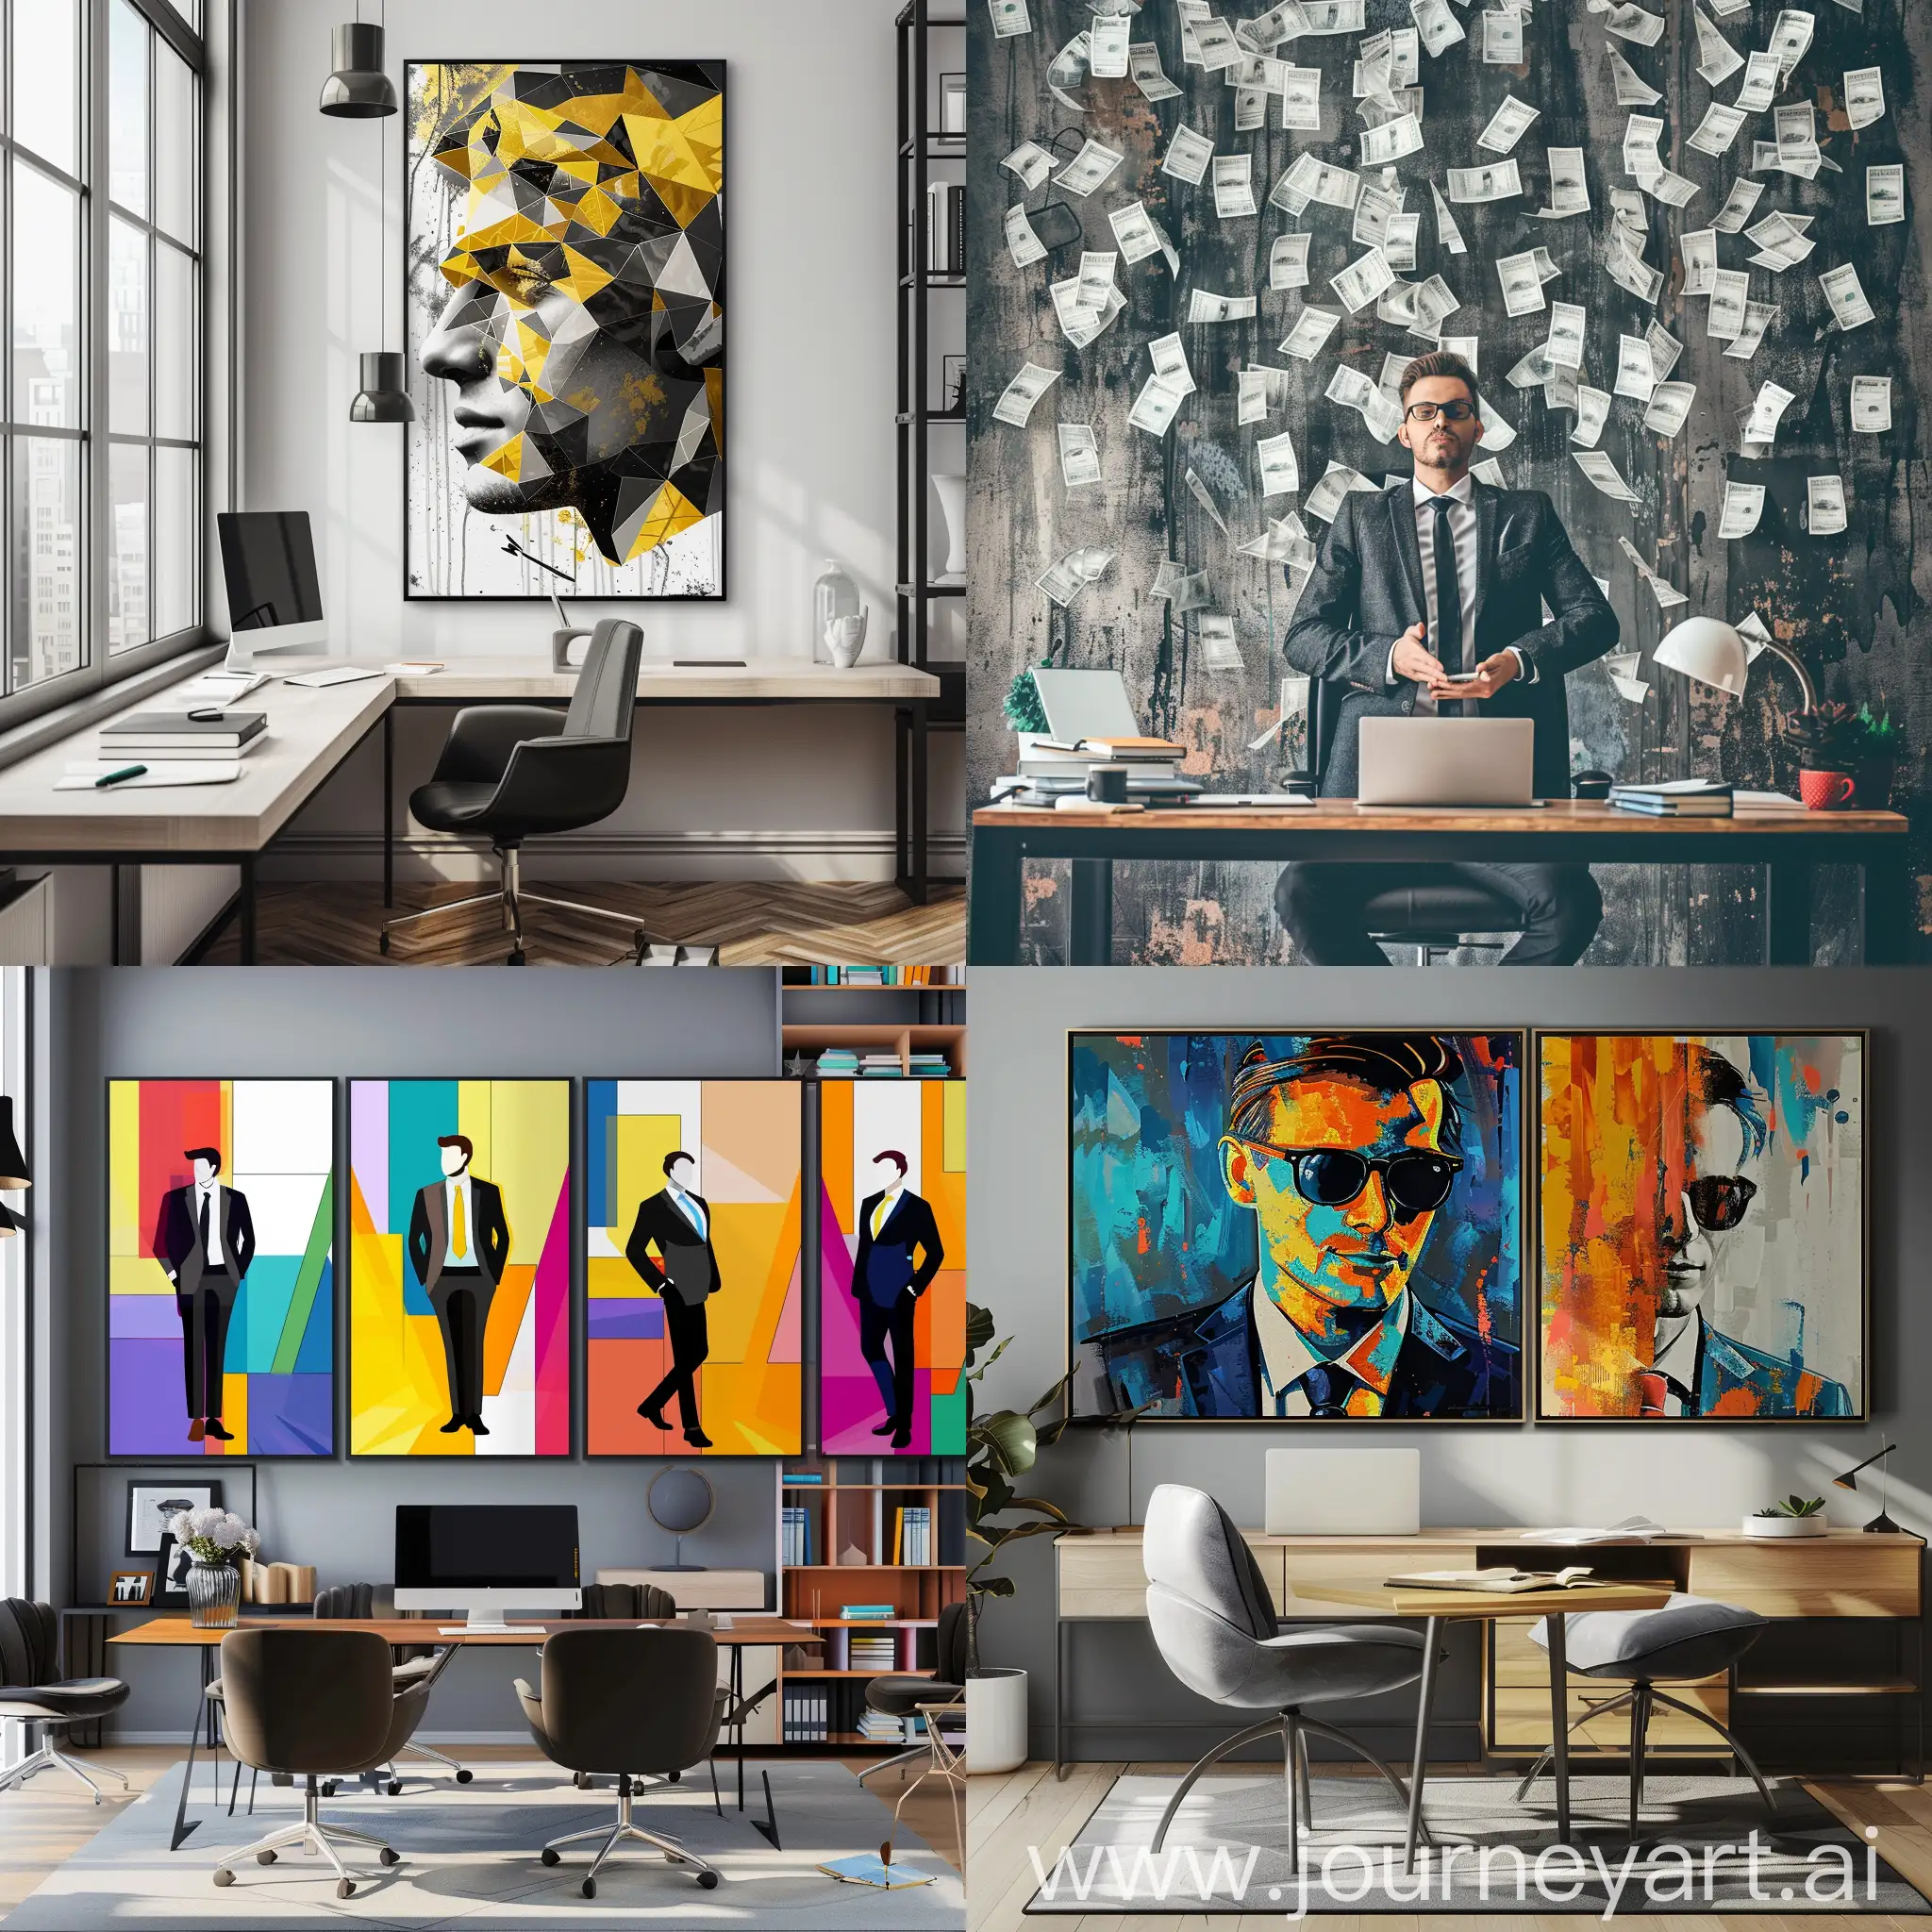 Entrepreneurial-Motivation-Inspiring-Wall-Art-for-Home-Office-or-Bedroom